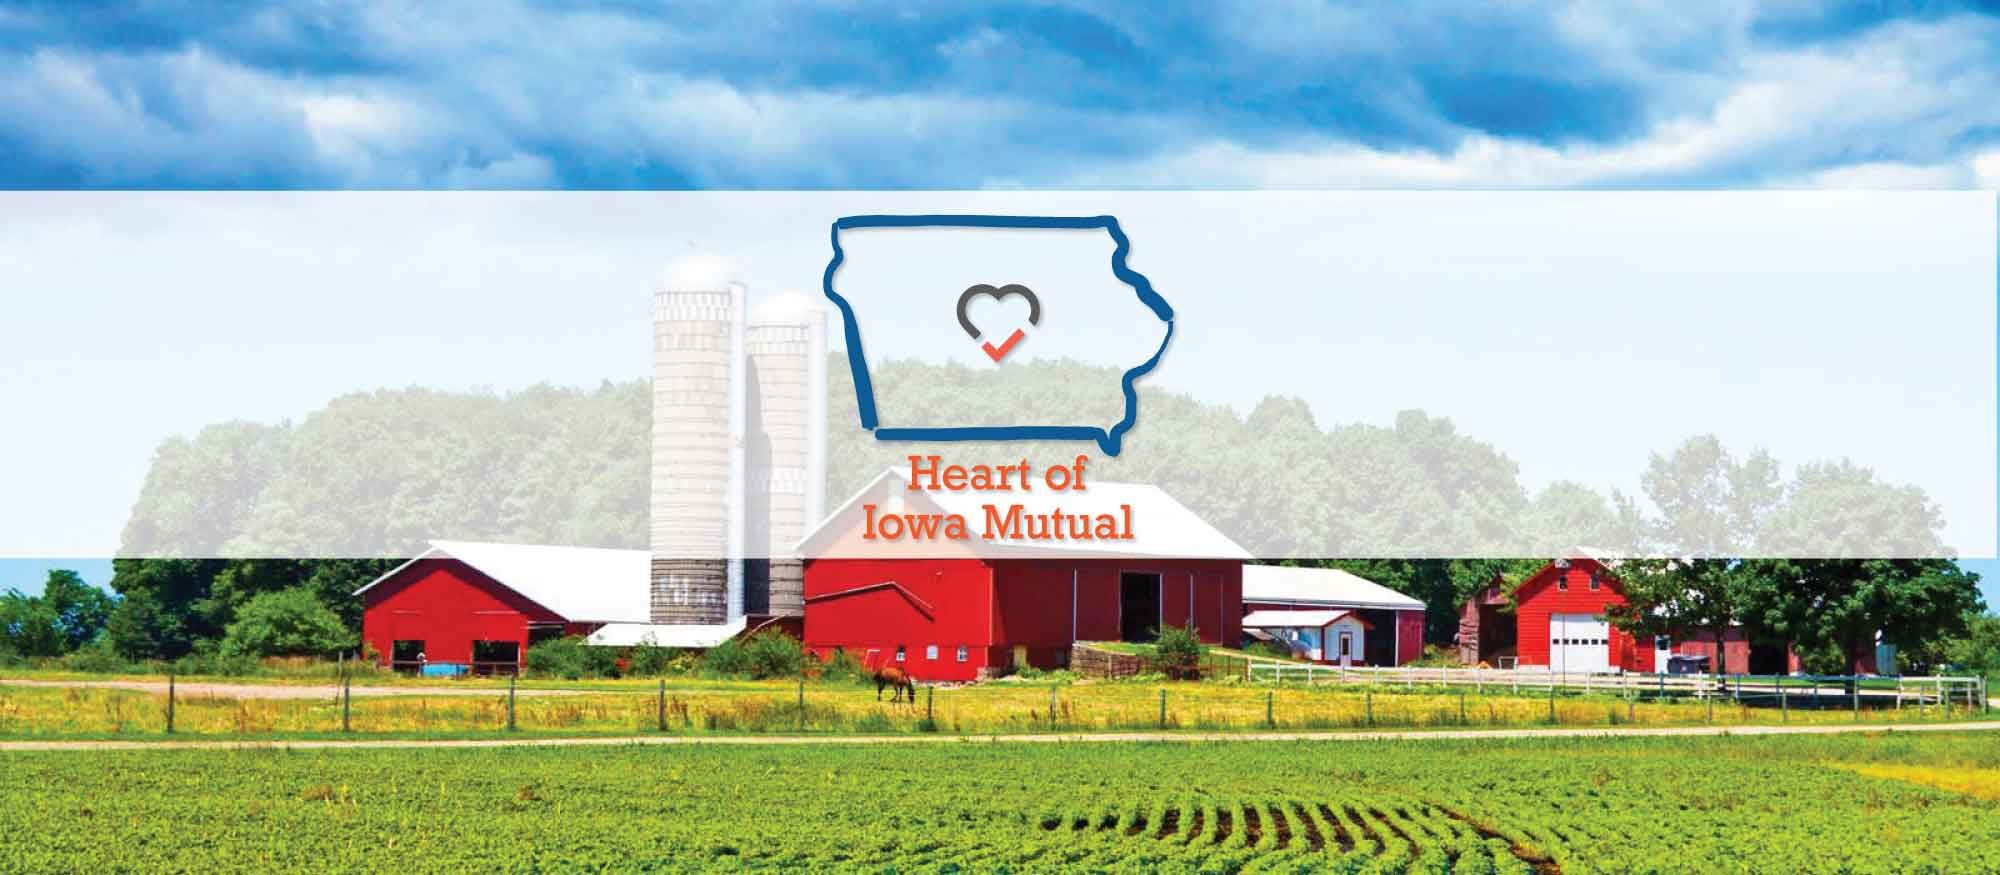 Heart of Iowa Mutual Insurance Association - Logo and Farm